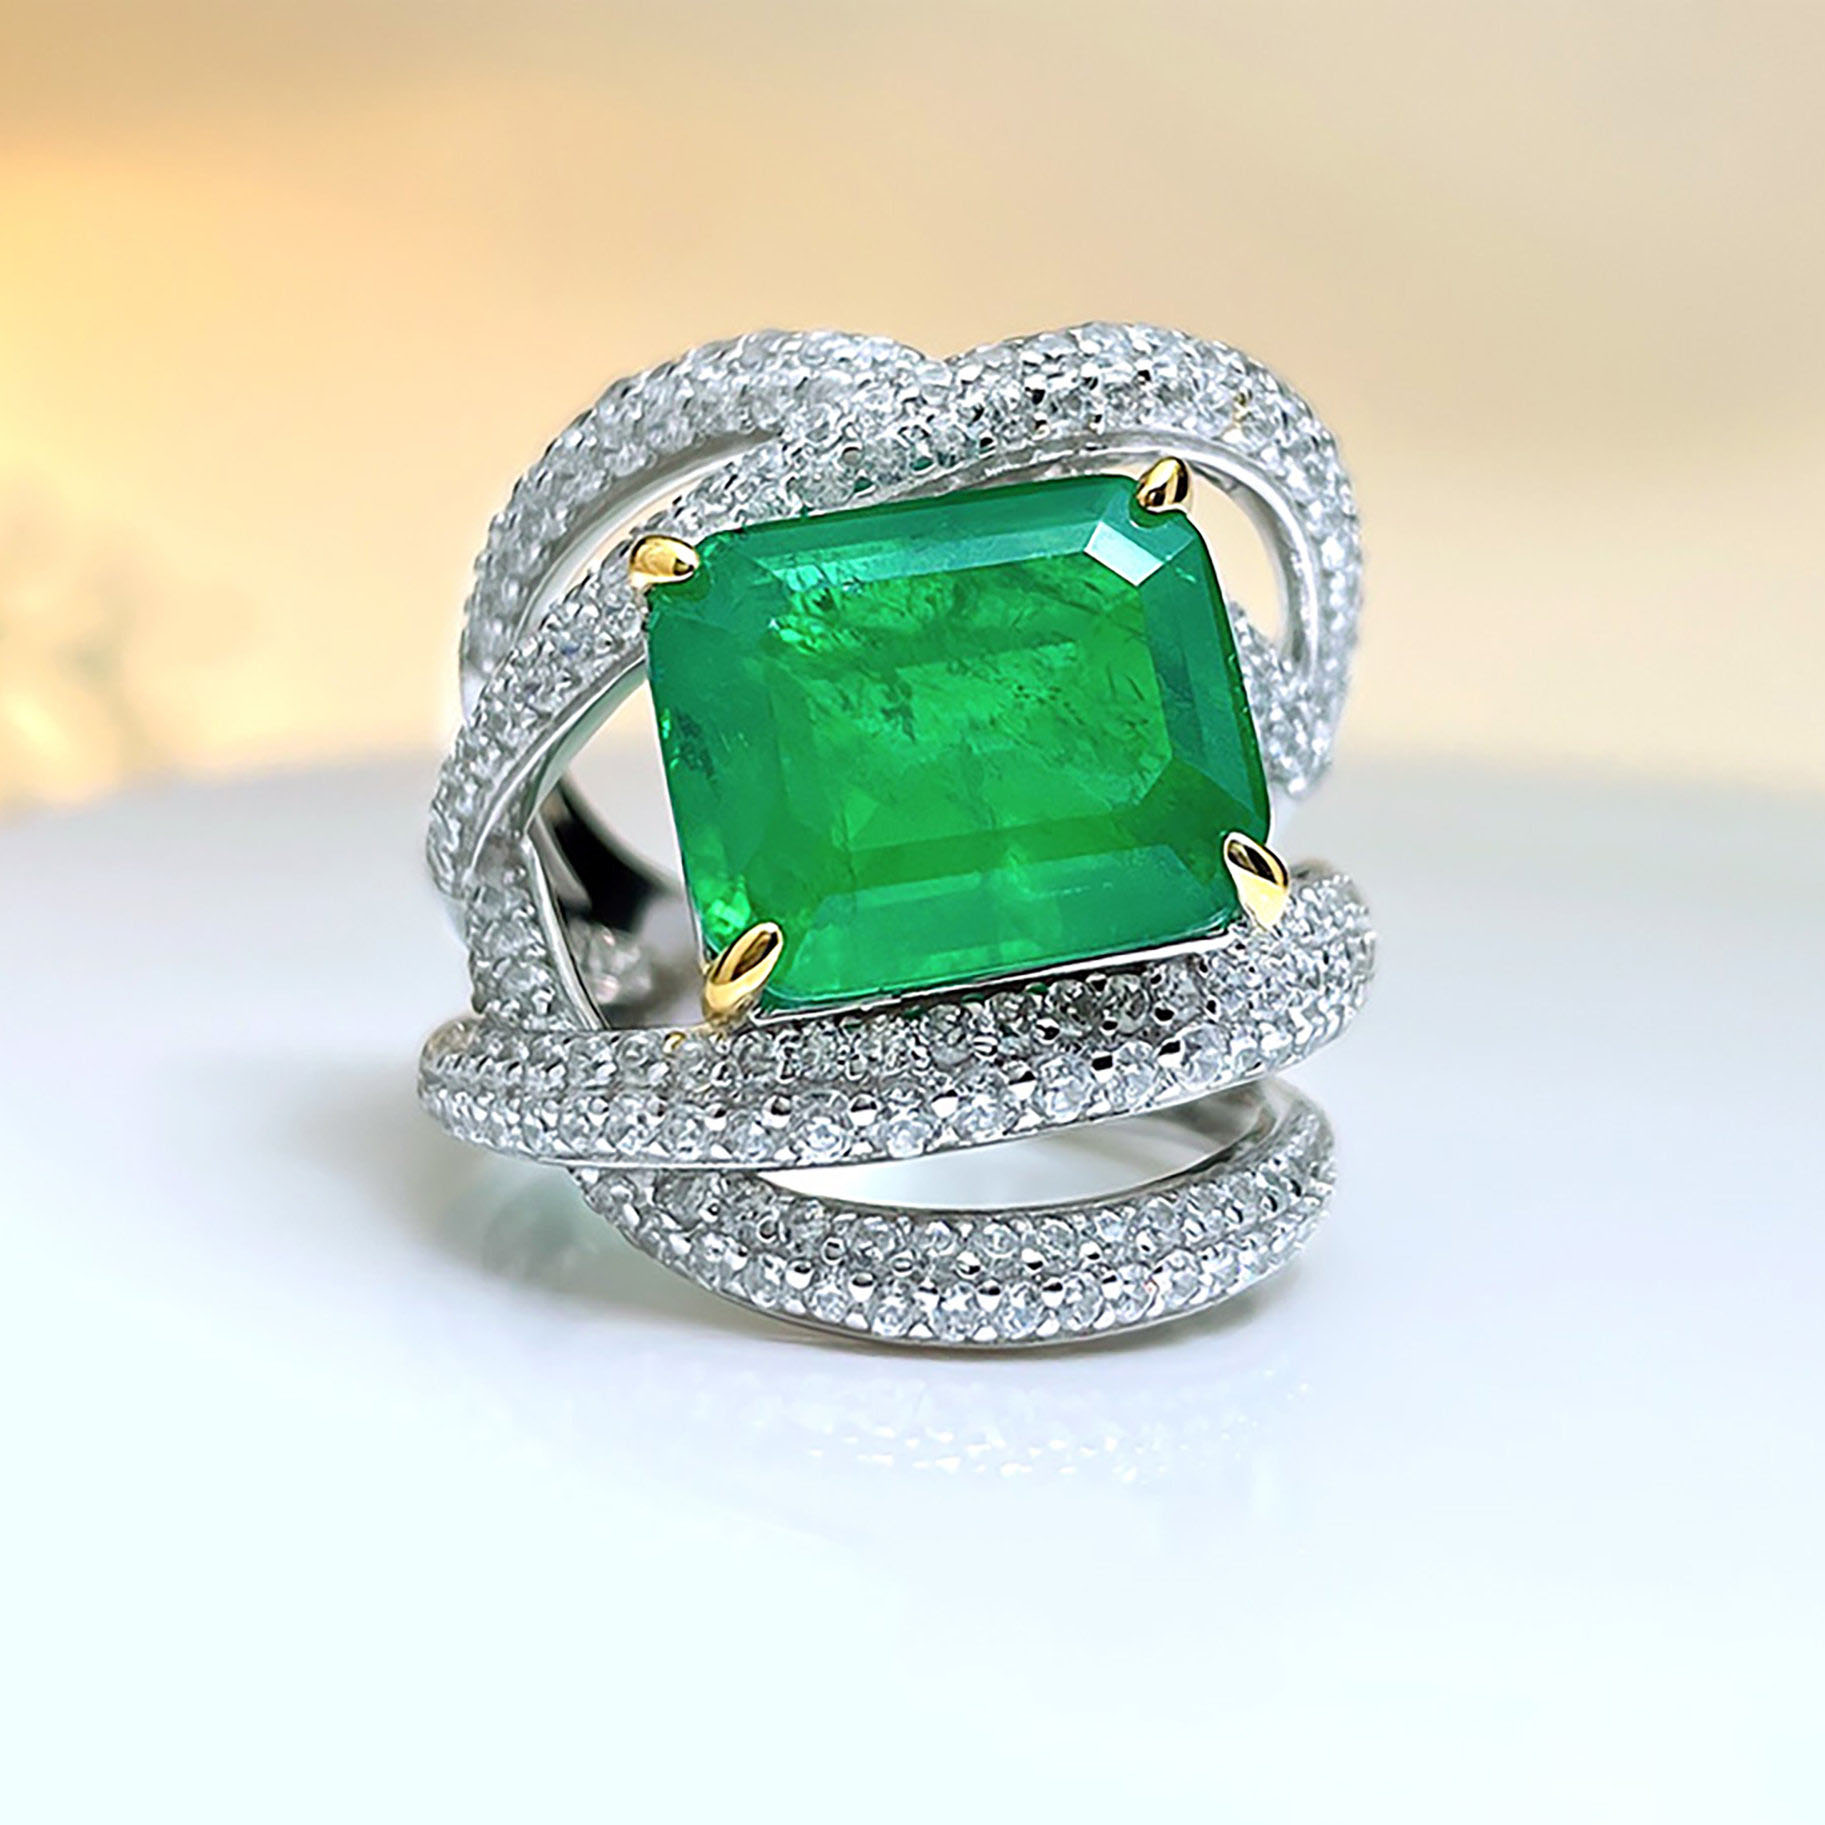 8ct Emerald Cut Vibrant Emerald Sapphire Engagement Ring